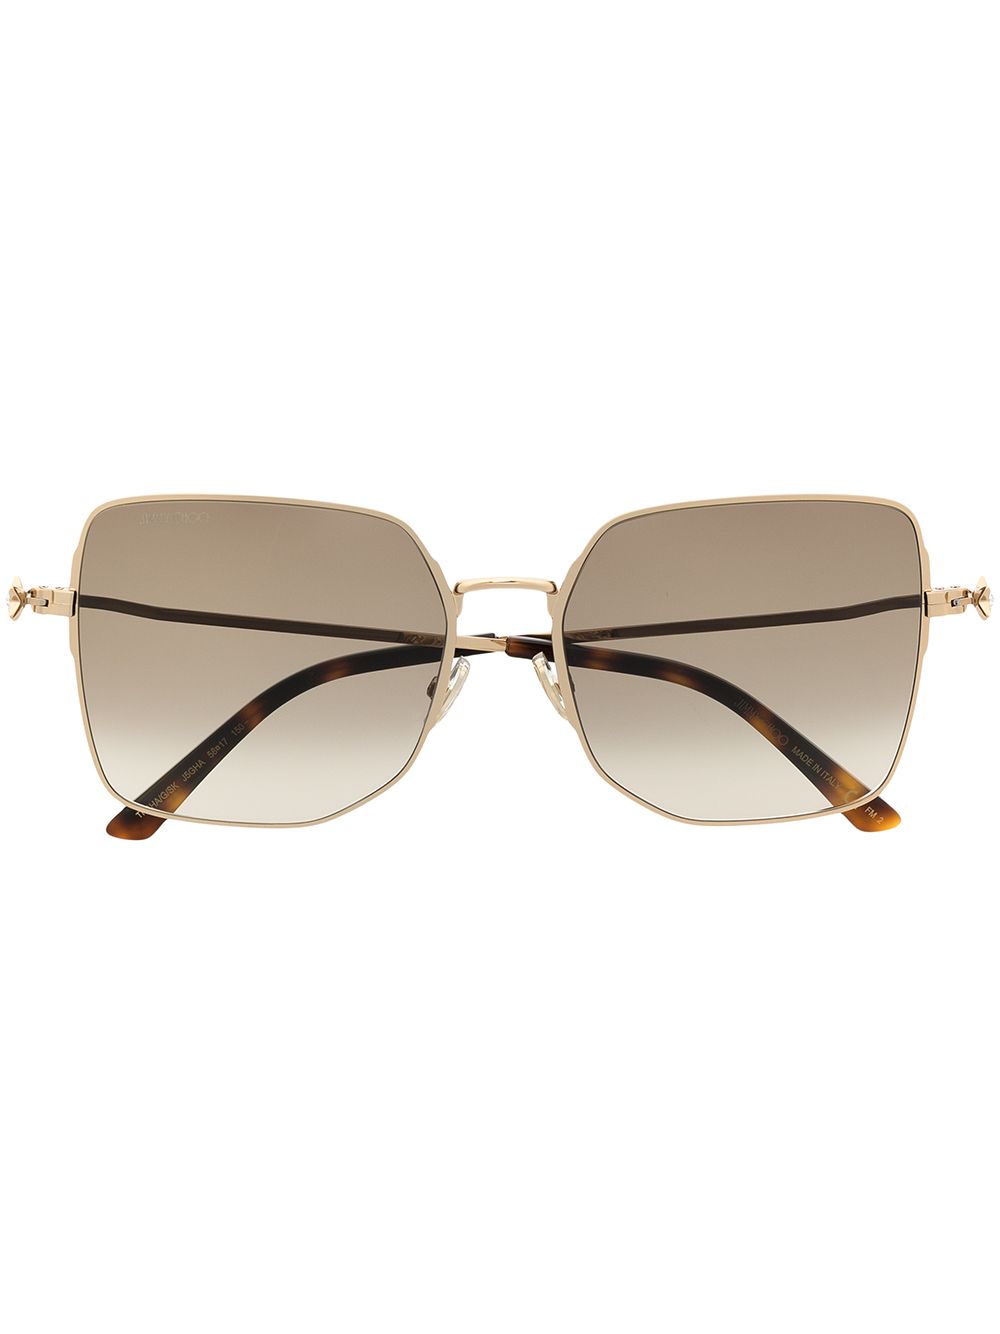 Jimmy Choo Eyewear Trisha oversized square sunglasses - Brown von Jimmy Choo Eyewear